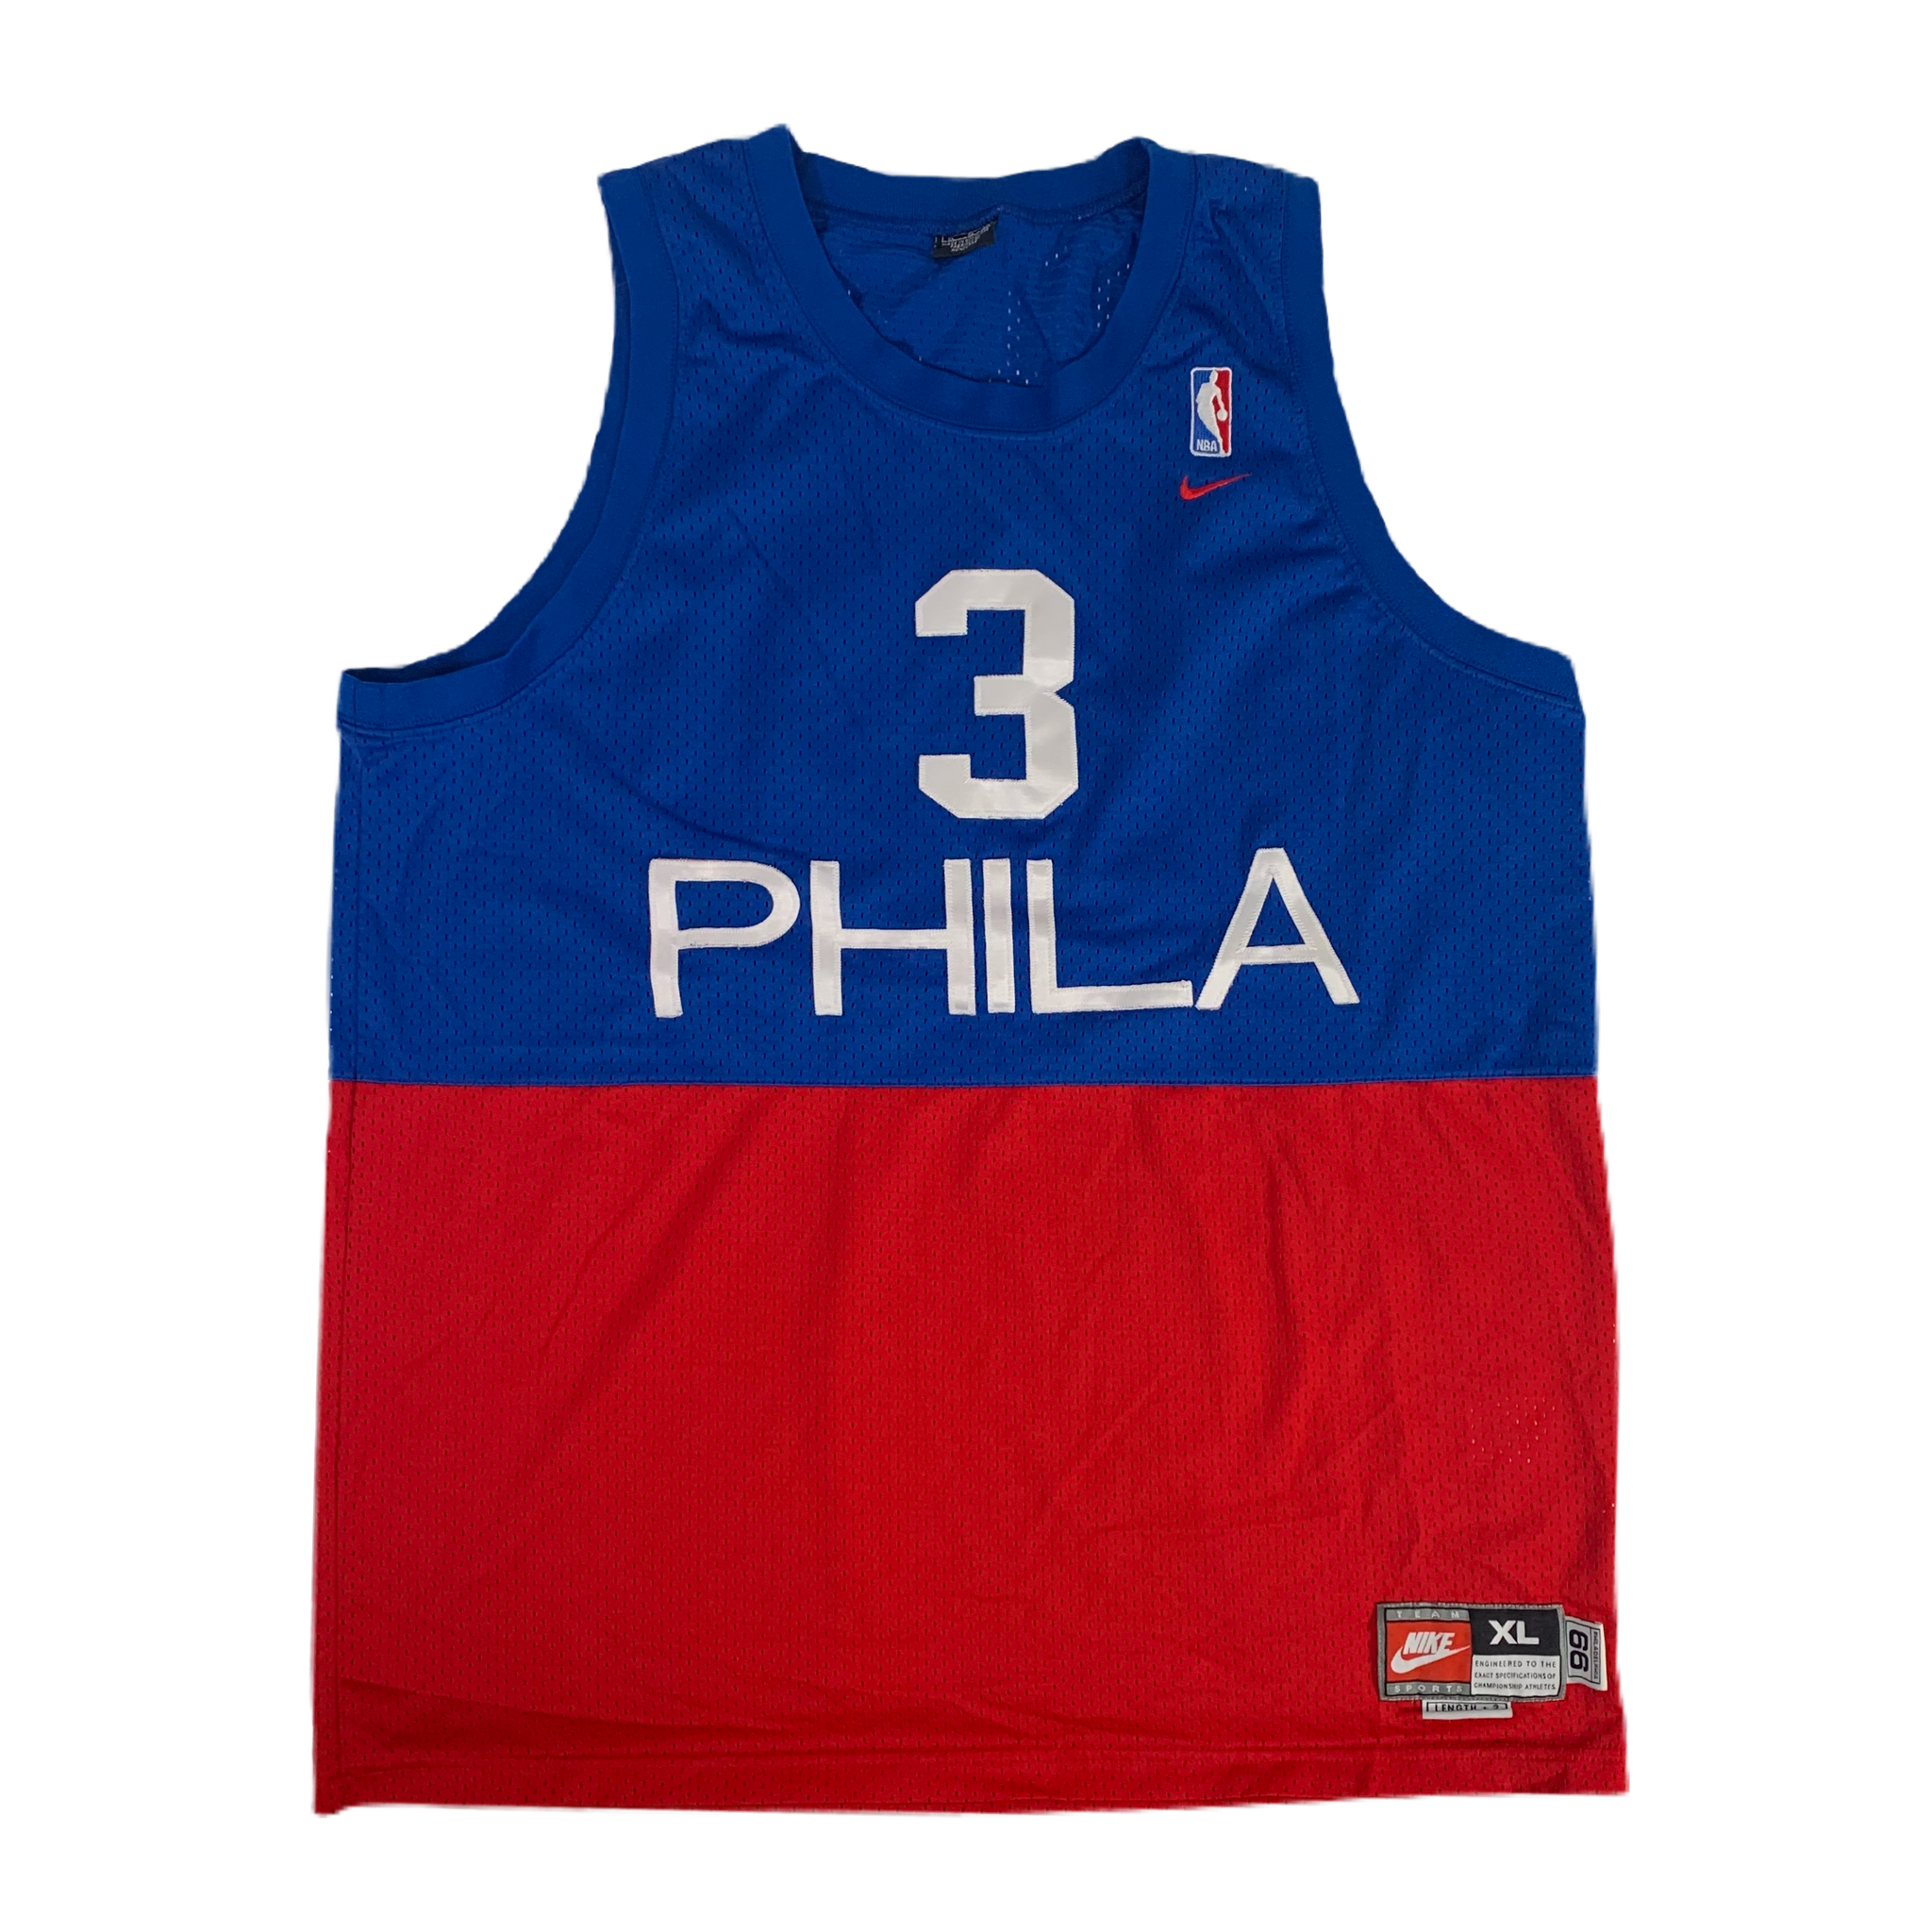 Philadelphia 76ers Jerseys in Philadelphia 76ers Team Shop 